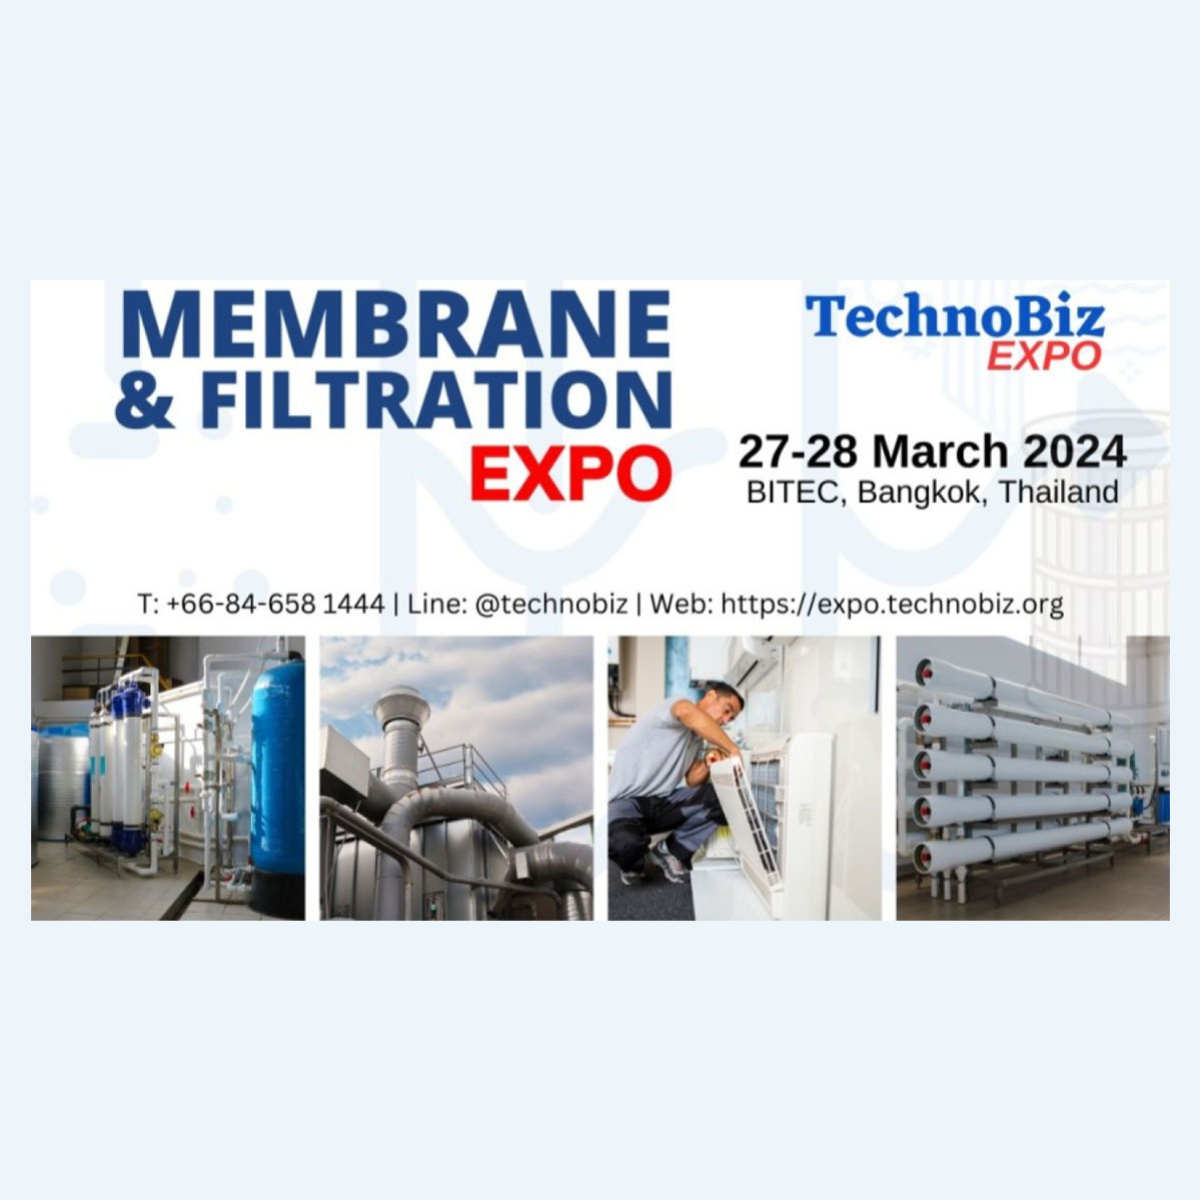 CleanAir sarà presente a Membrane&Filtration Expo in Bangkok dal 27-28 Marzo 2024